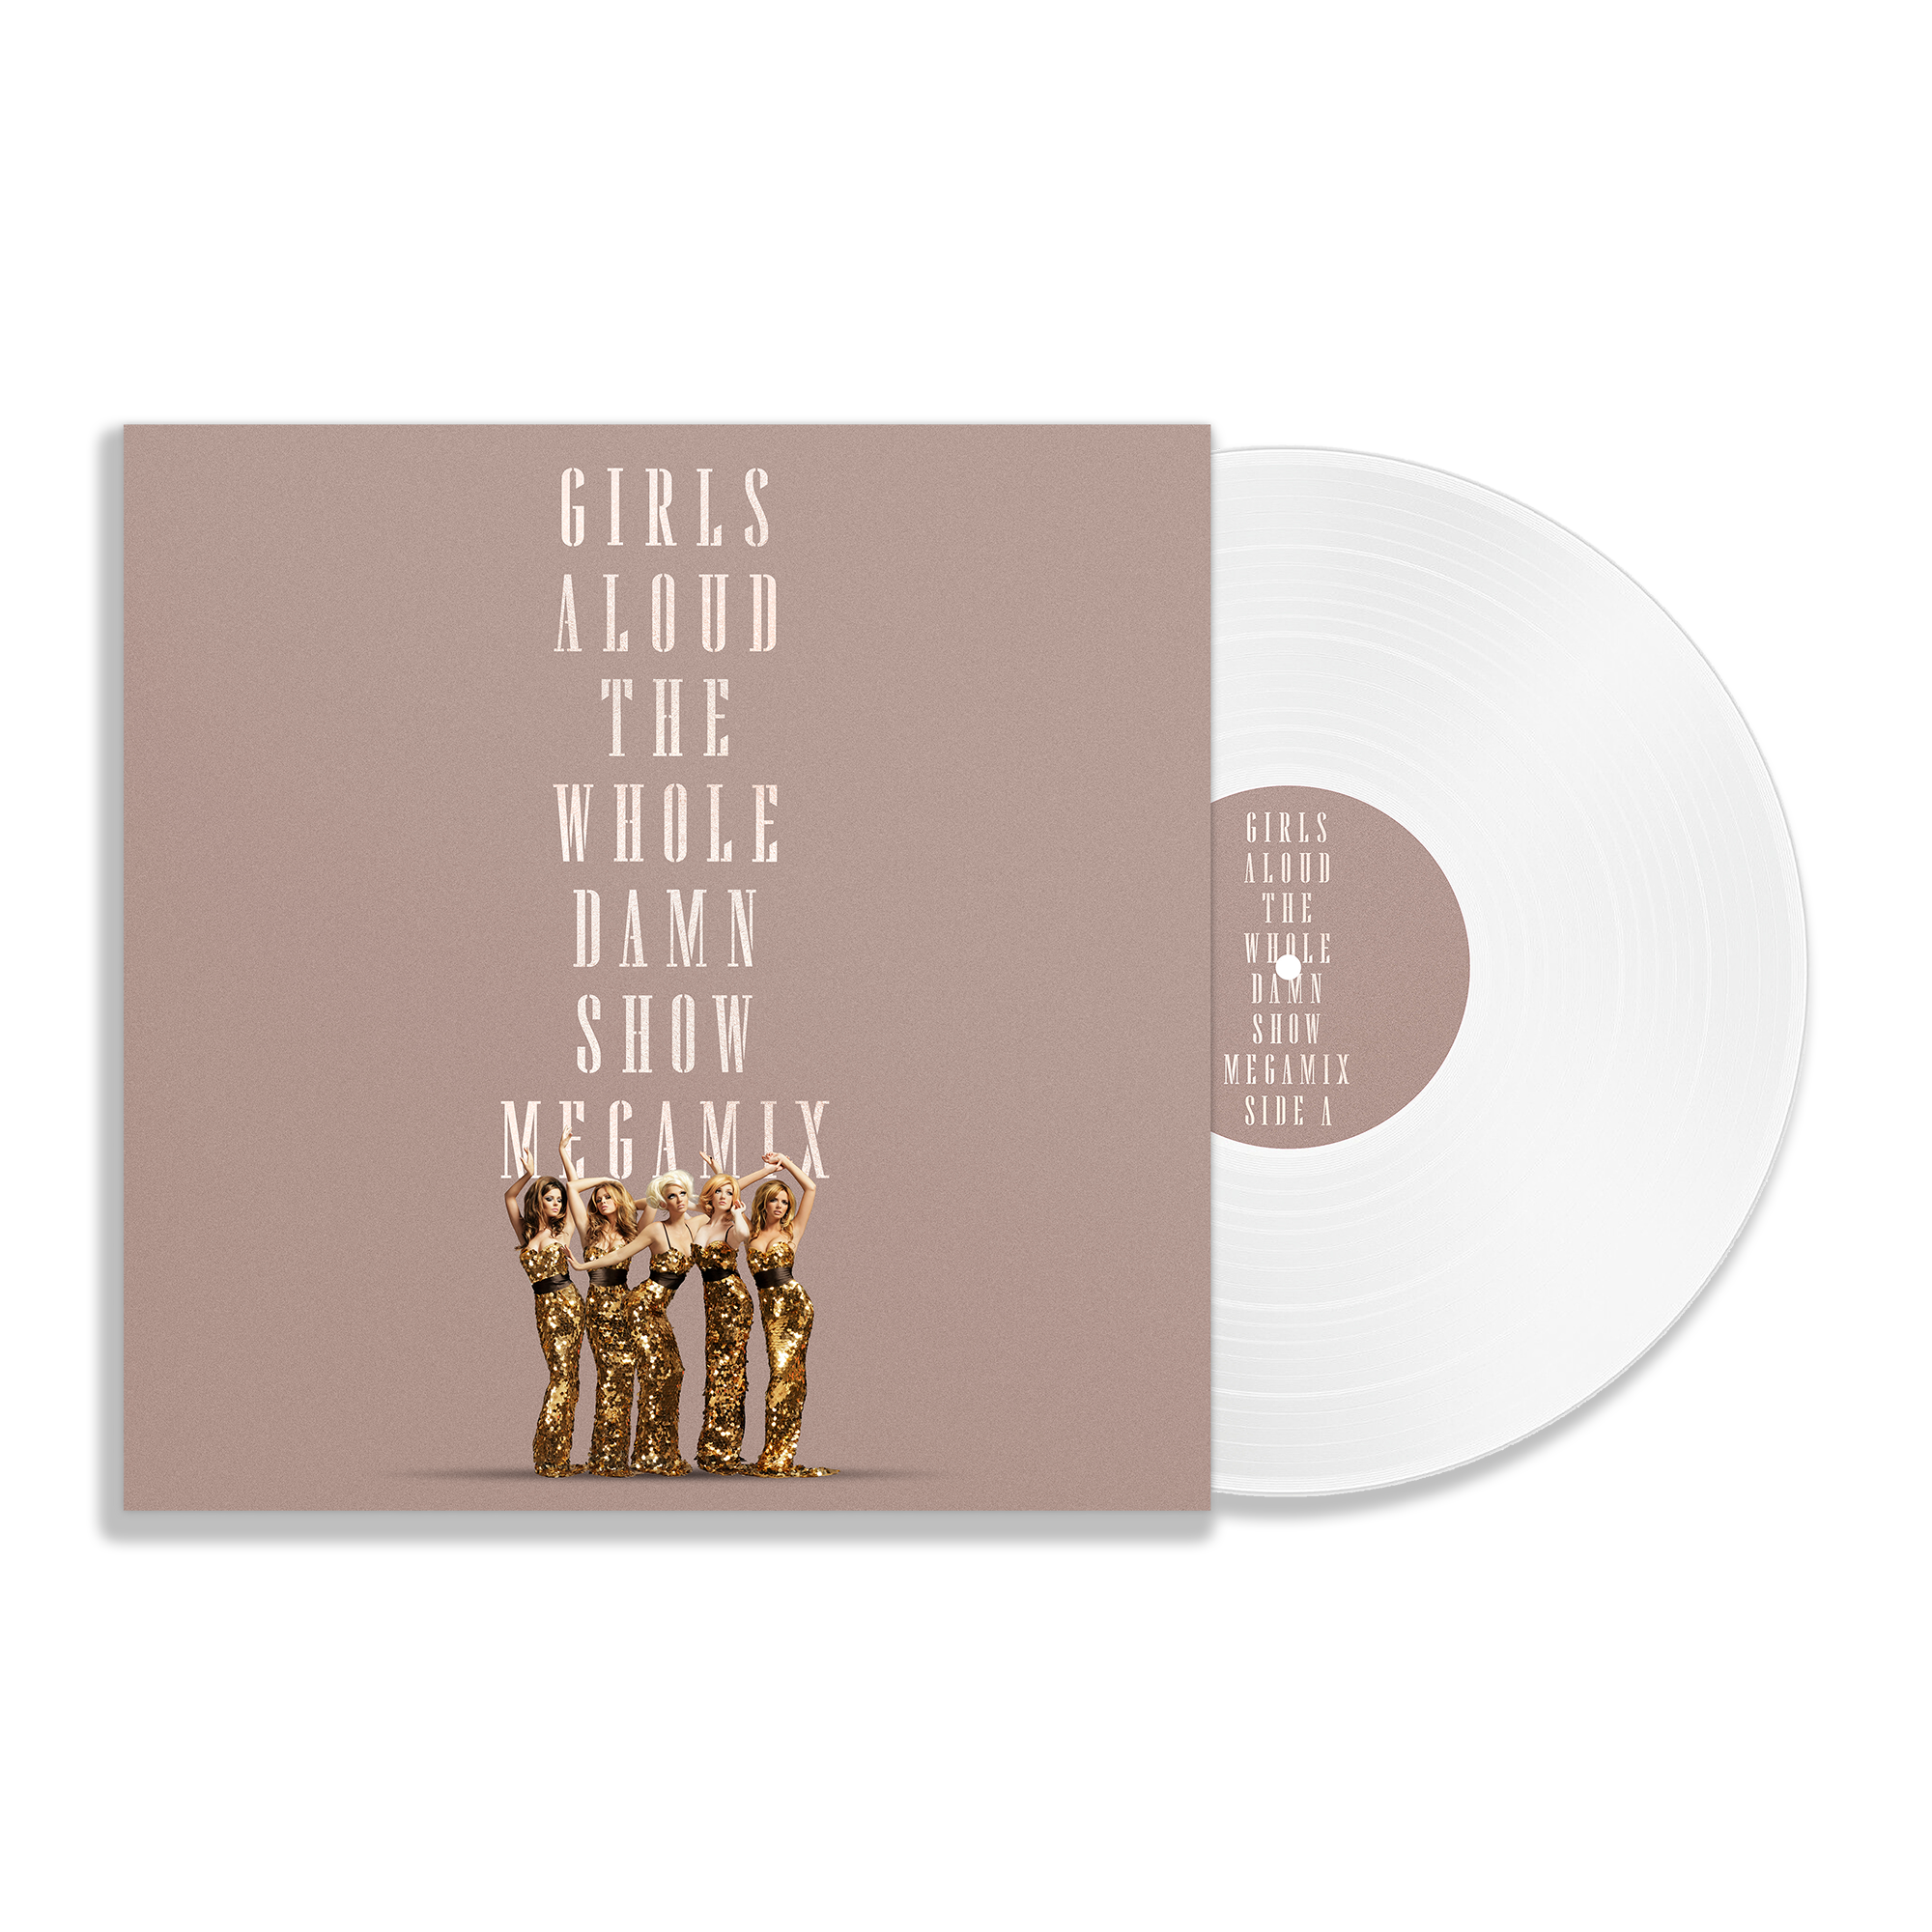 Girls Aloud - The Whole Damn Show - Megamix: Limited Ultra Clear Vinyl LP